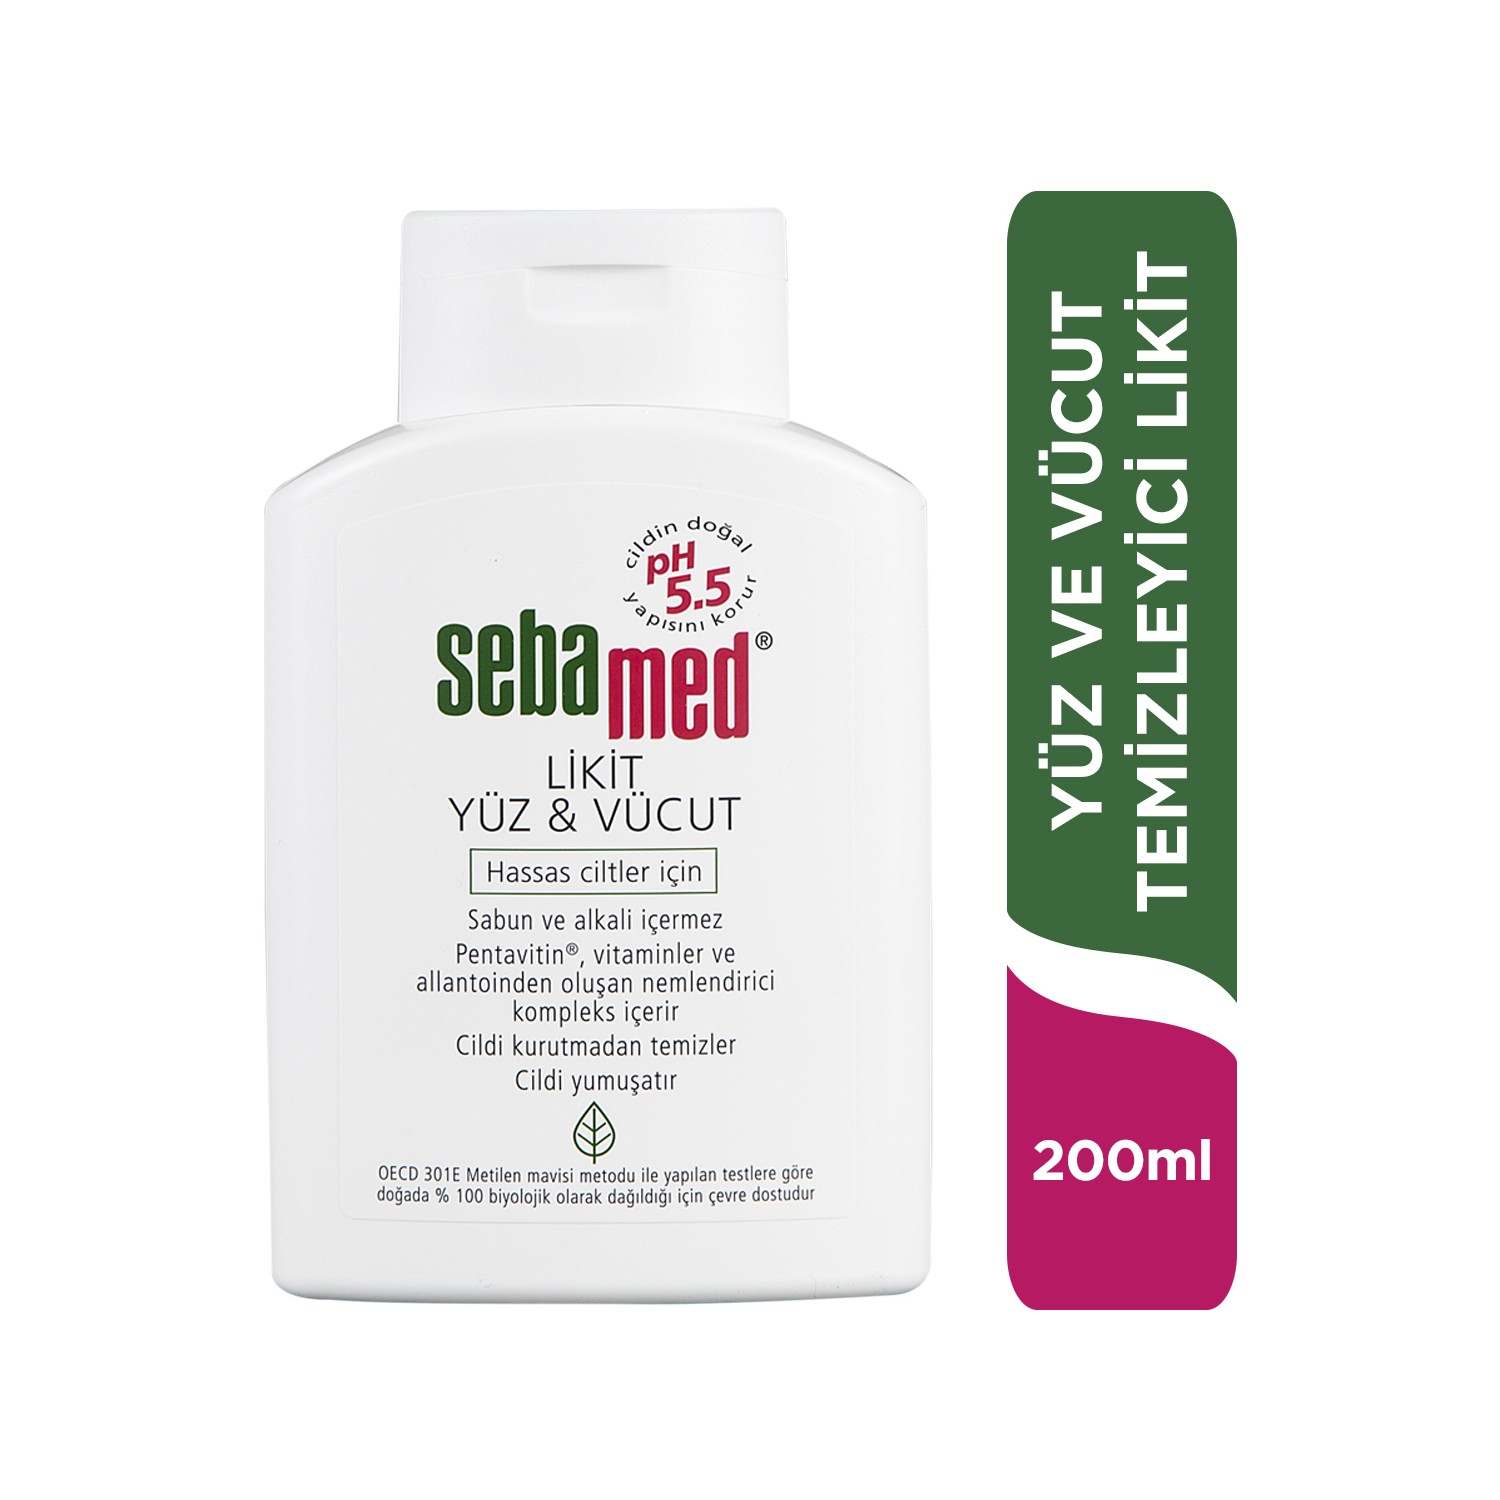 Очищающее средство Sebamed Liquid для лица и тела, 200 мл очищающее средство для лица и тела masil 21 probiotics skin wash 500 мл